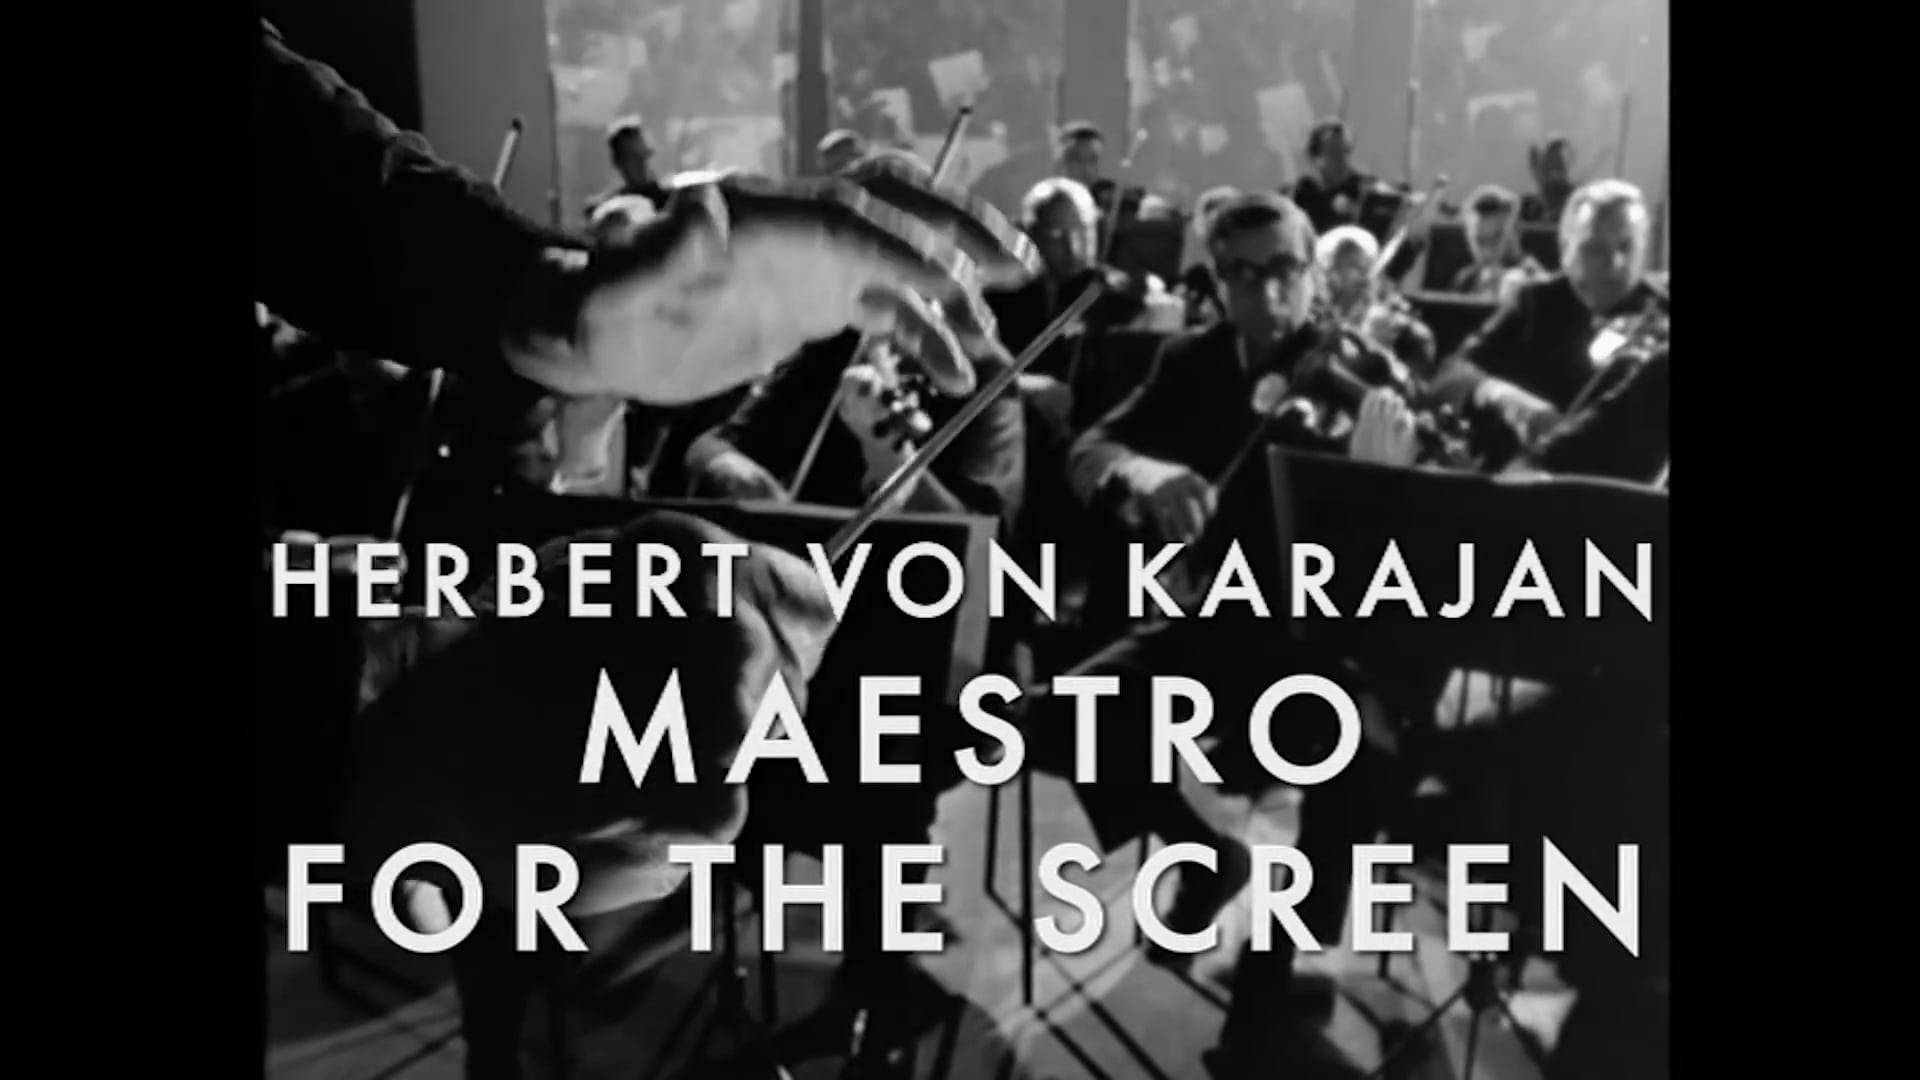 Herbert von Karajan Maestro for the screen